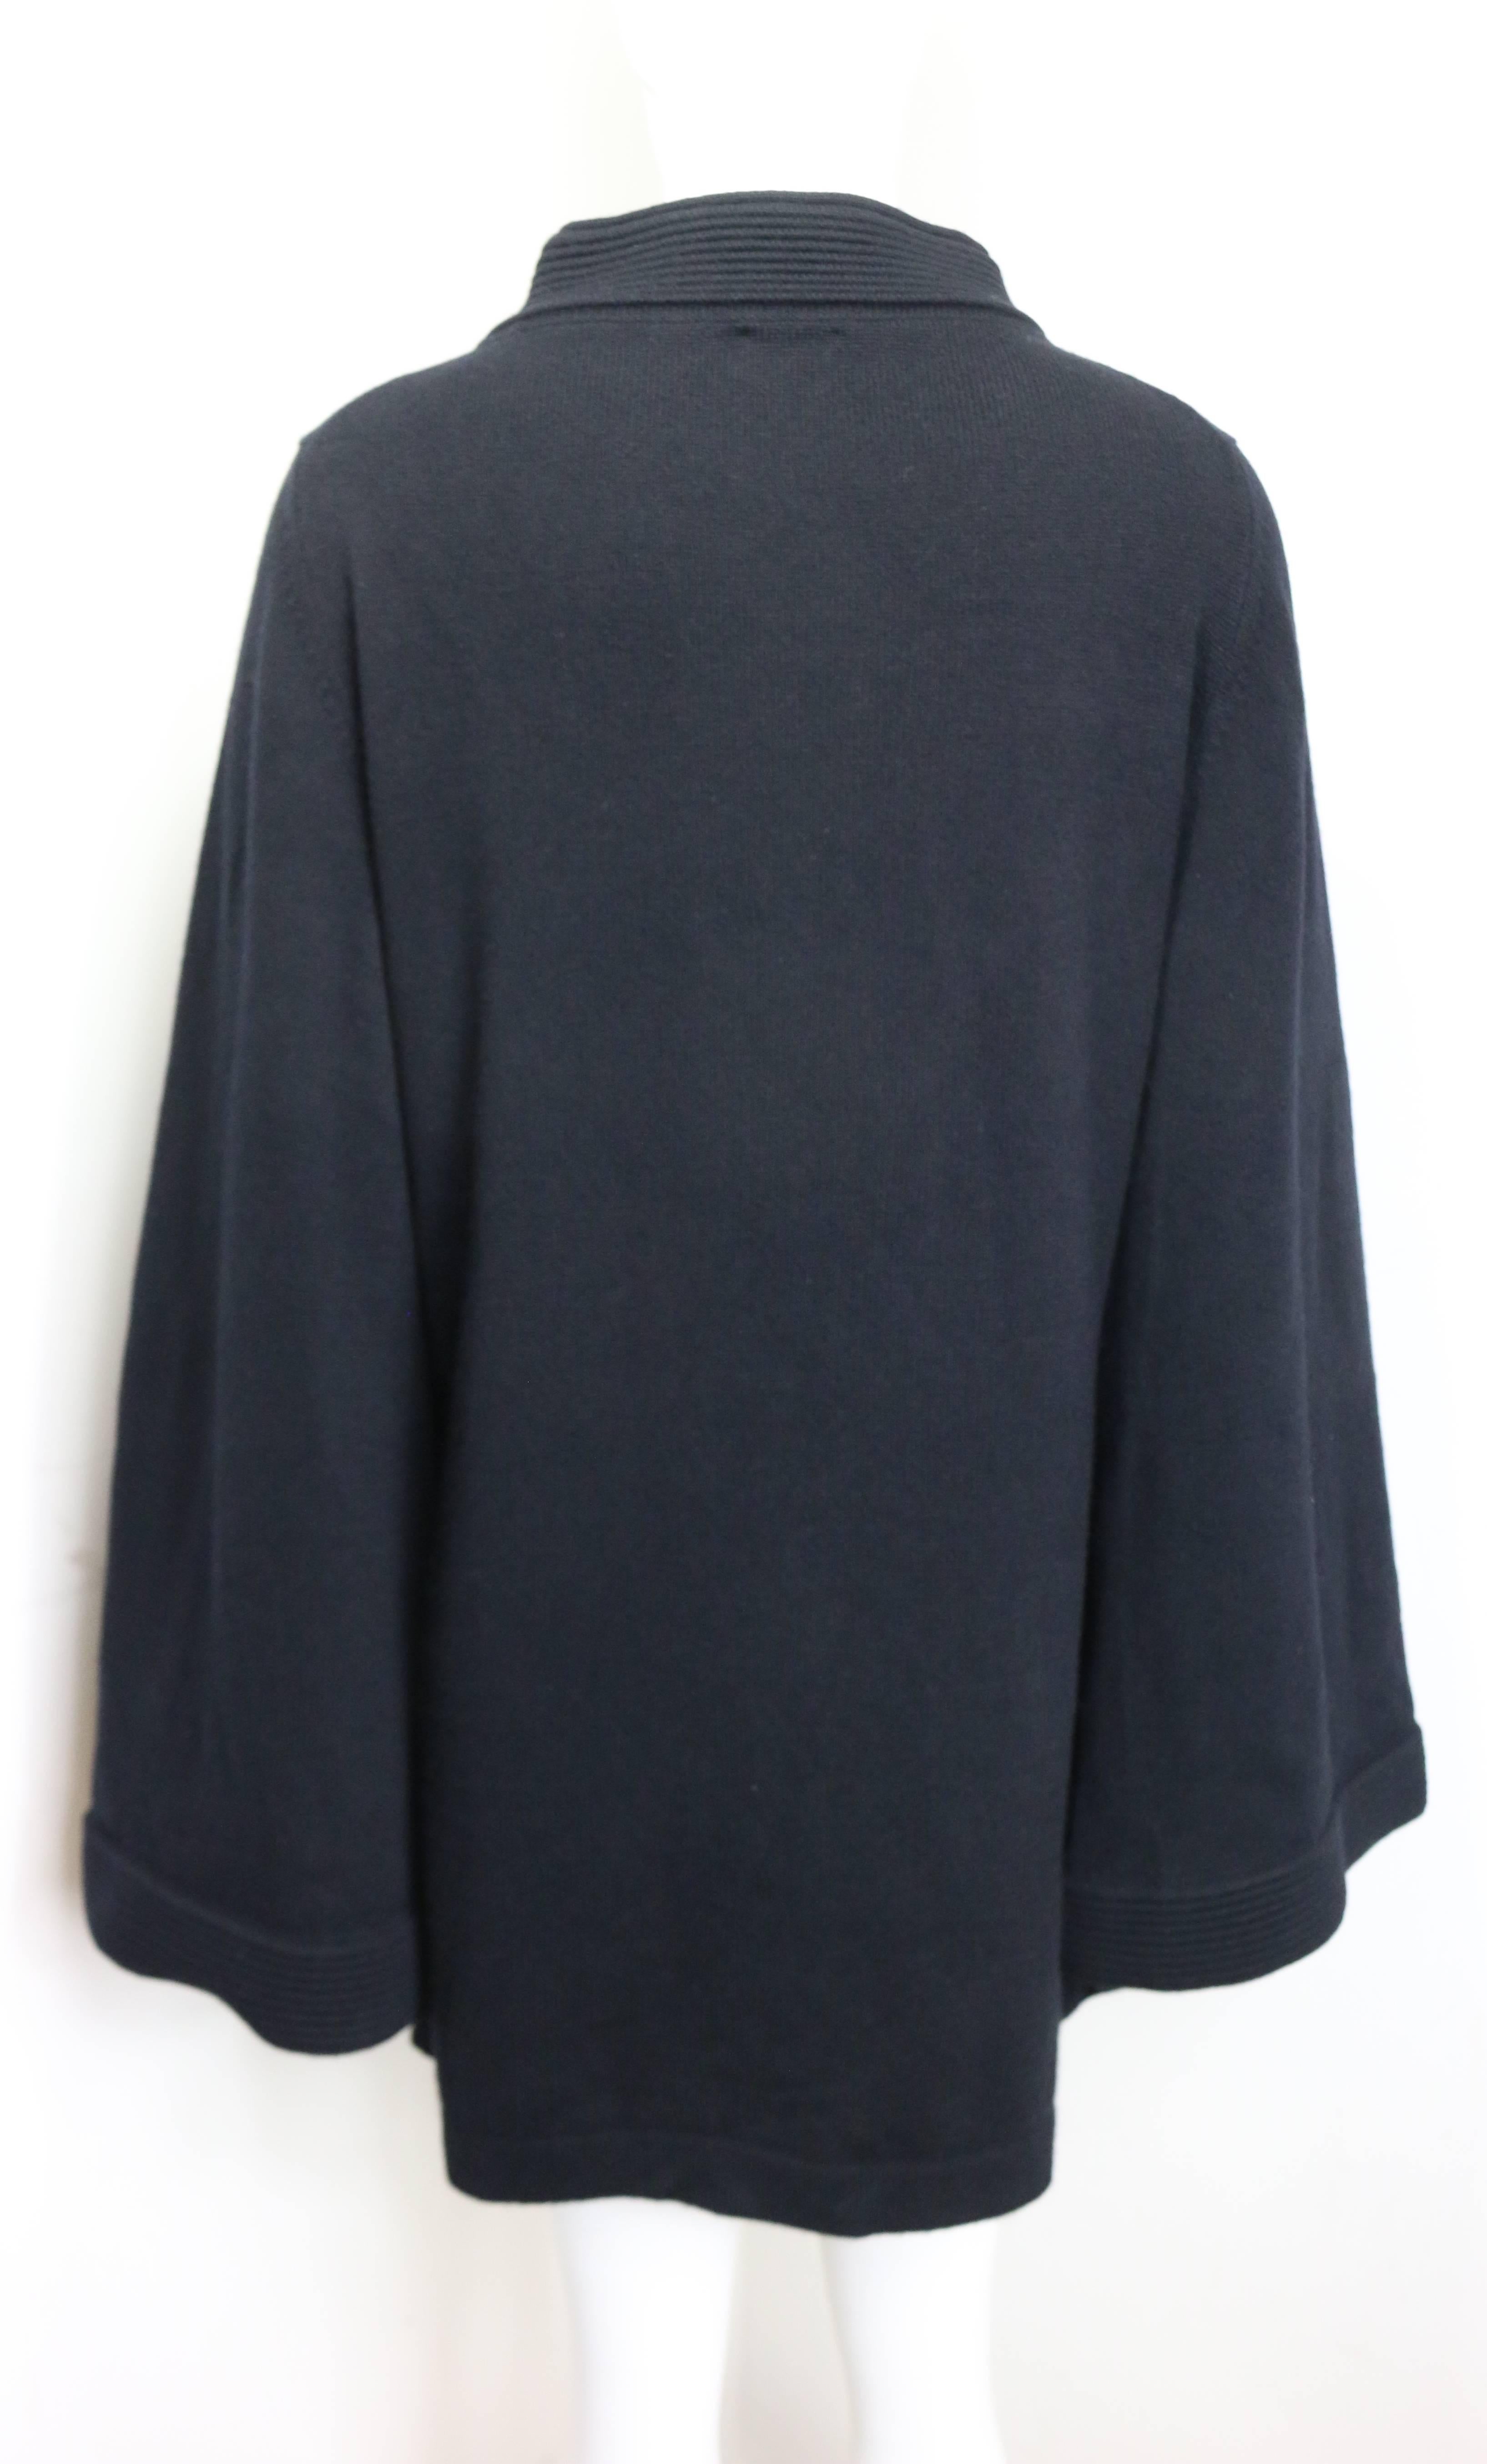 black cashmere sweater dress